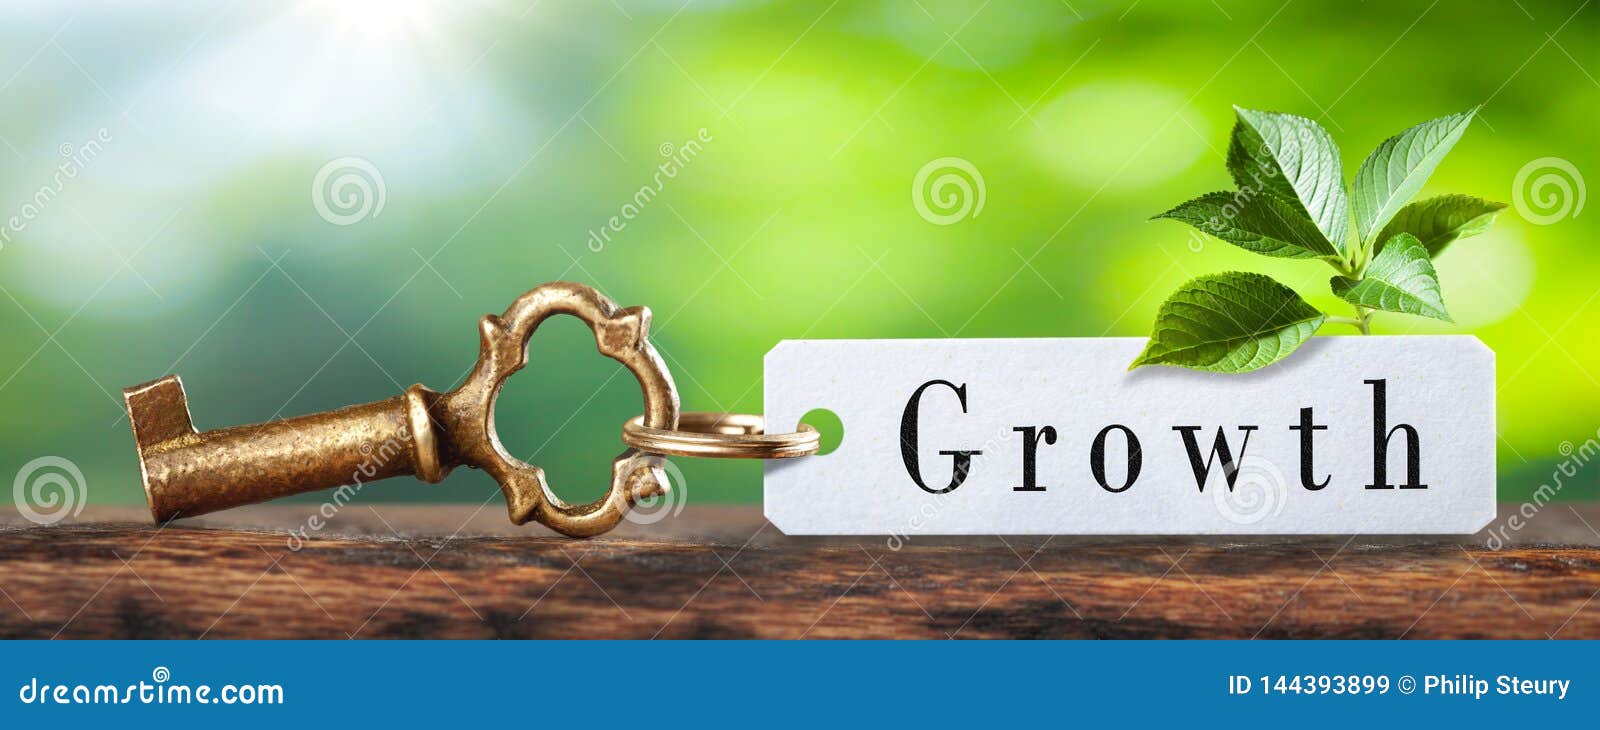 key to growth